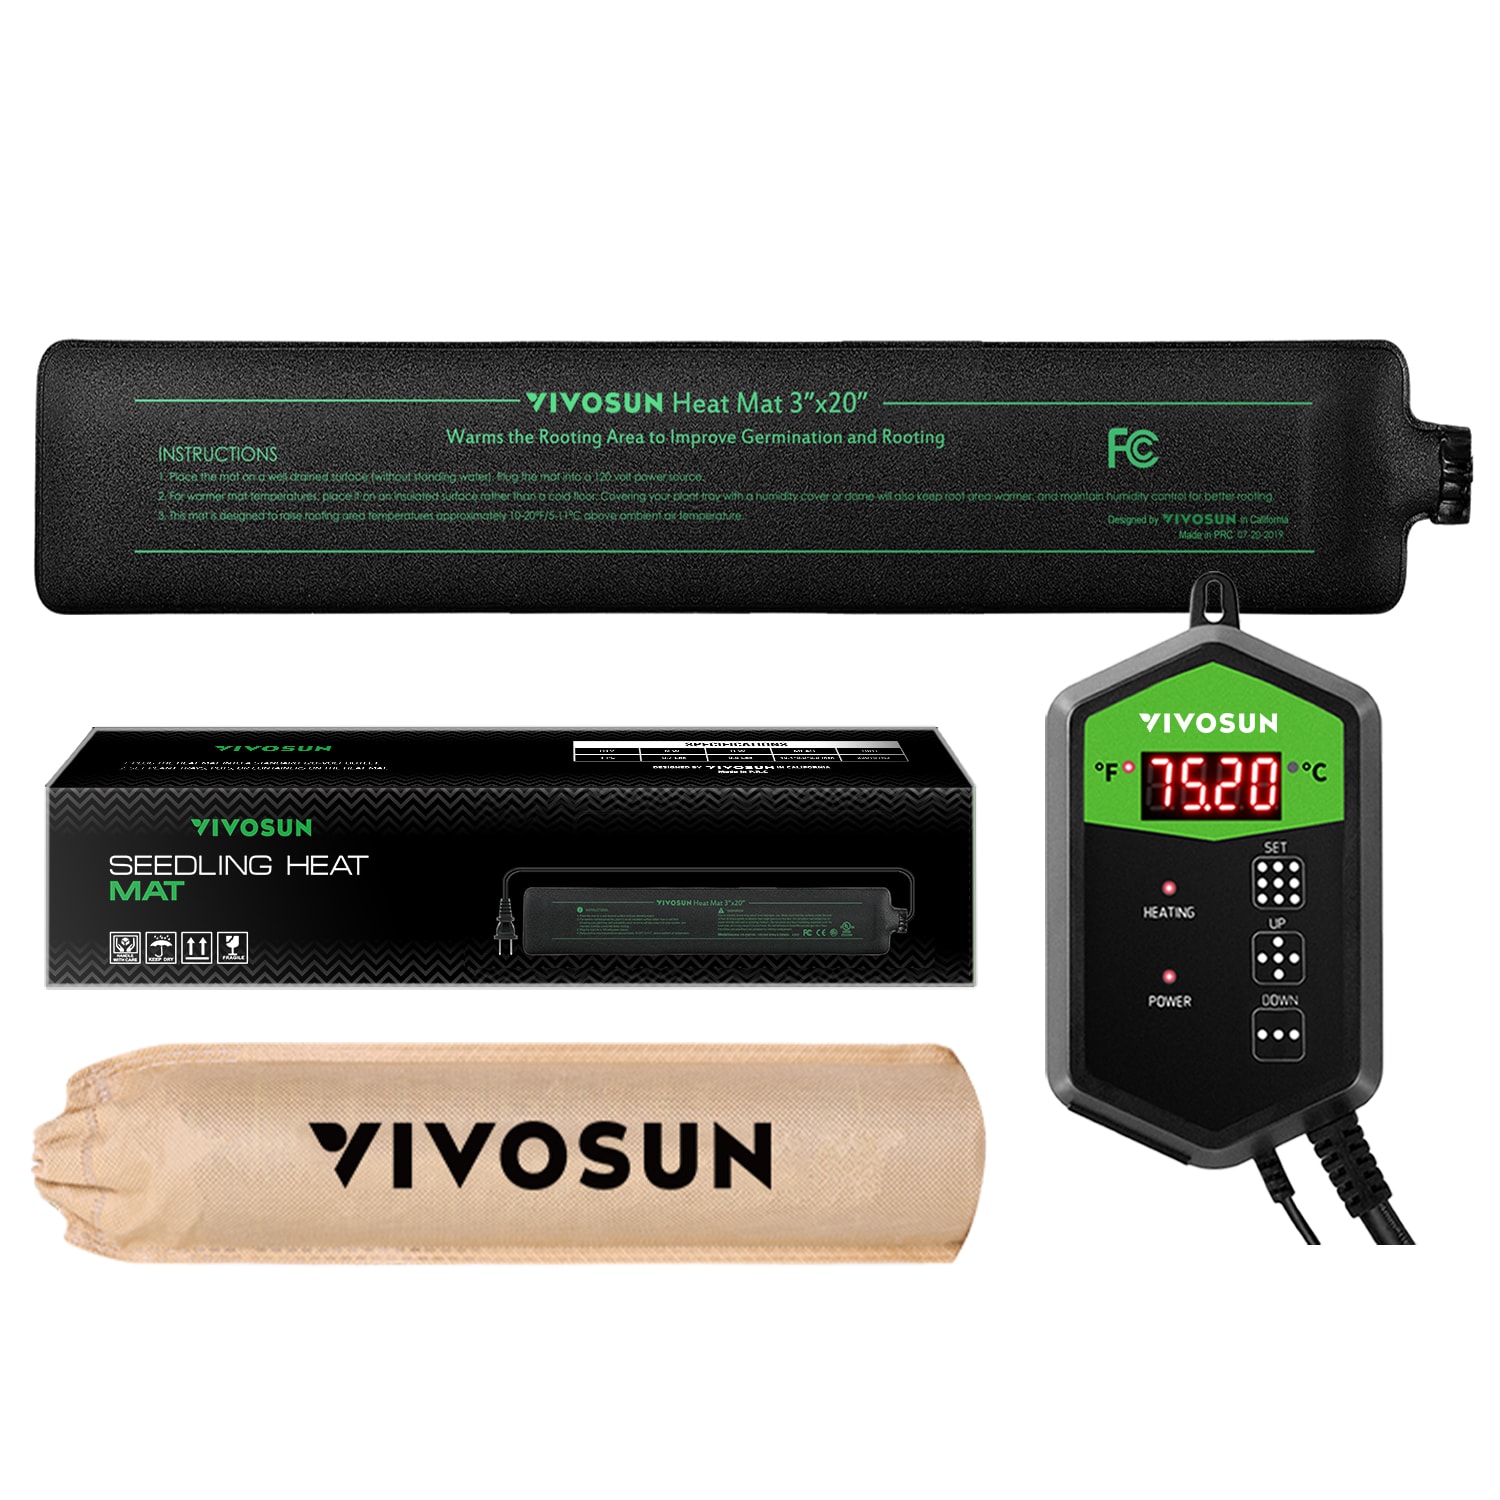 Unboxing Vivosun Heat Mat and Digital Thermostat Combo 